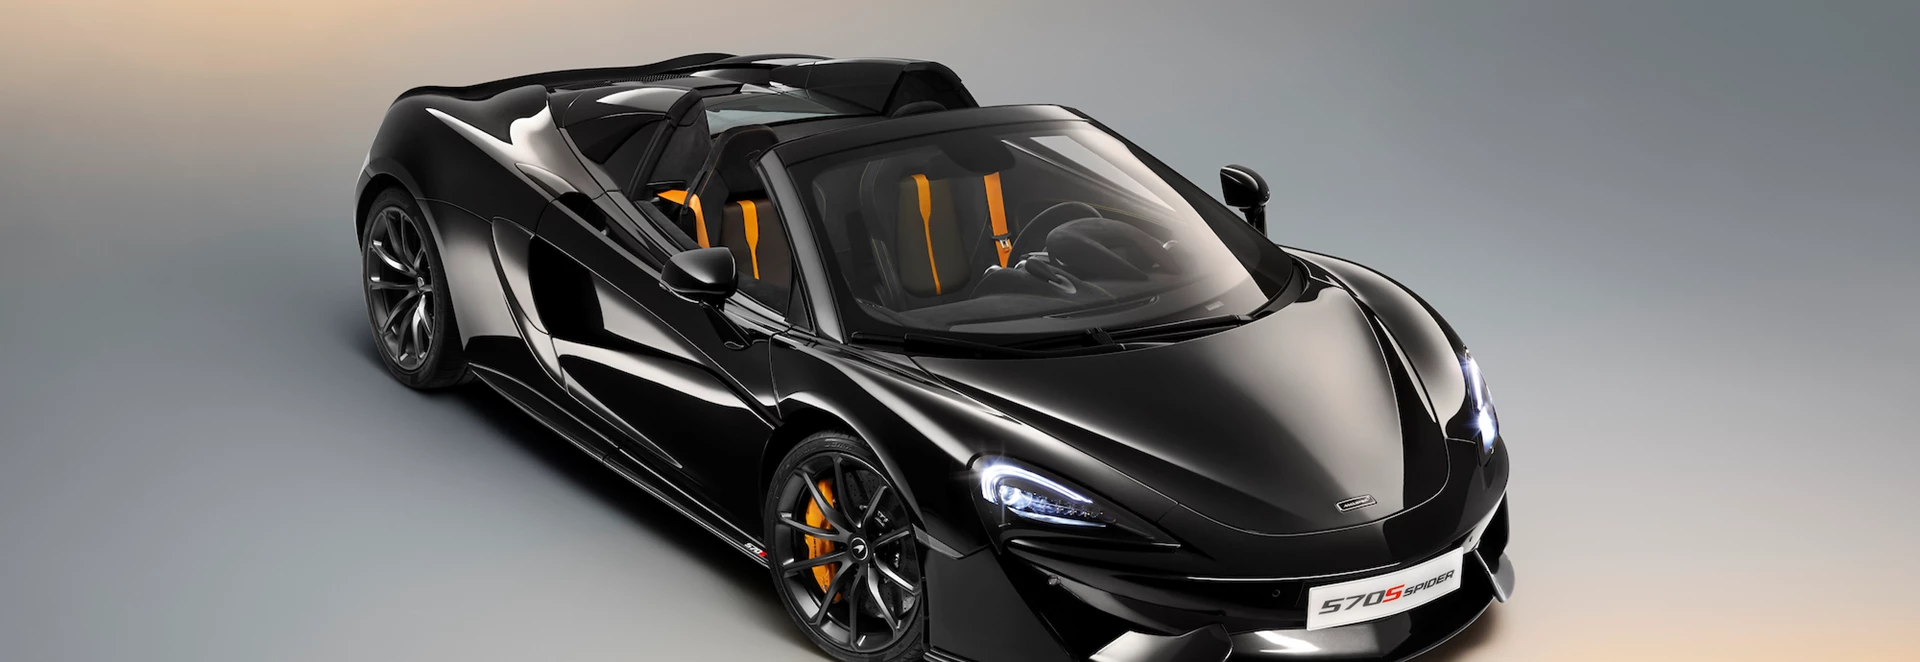 McLaren Design Editions for 570S Spider revealed